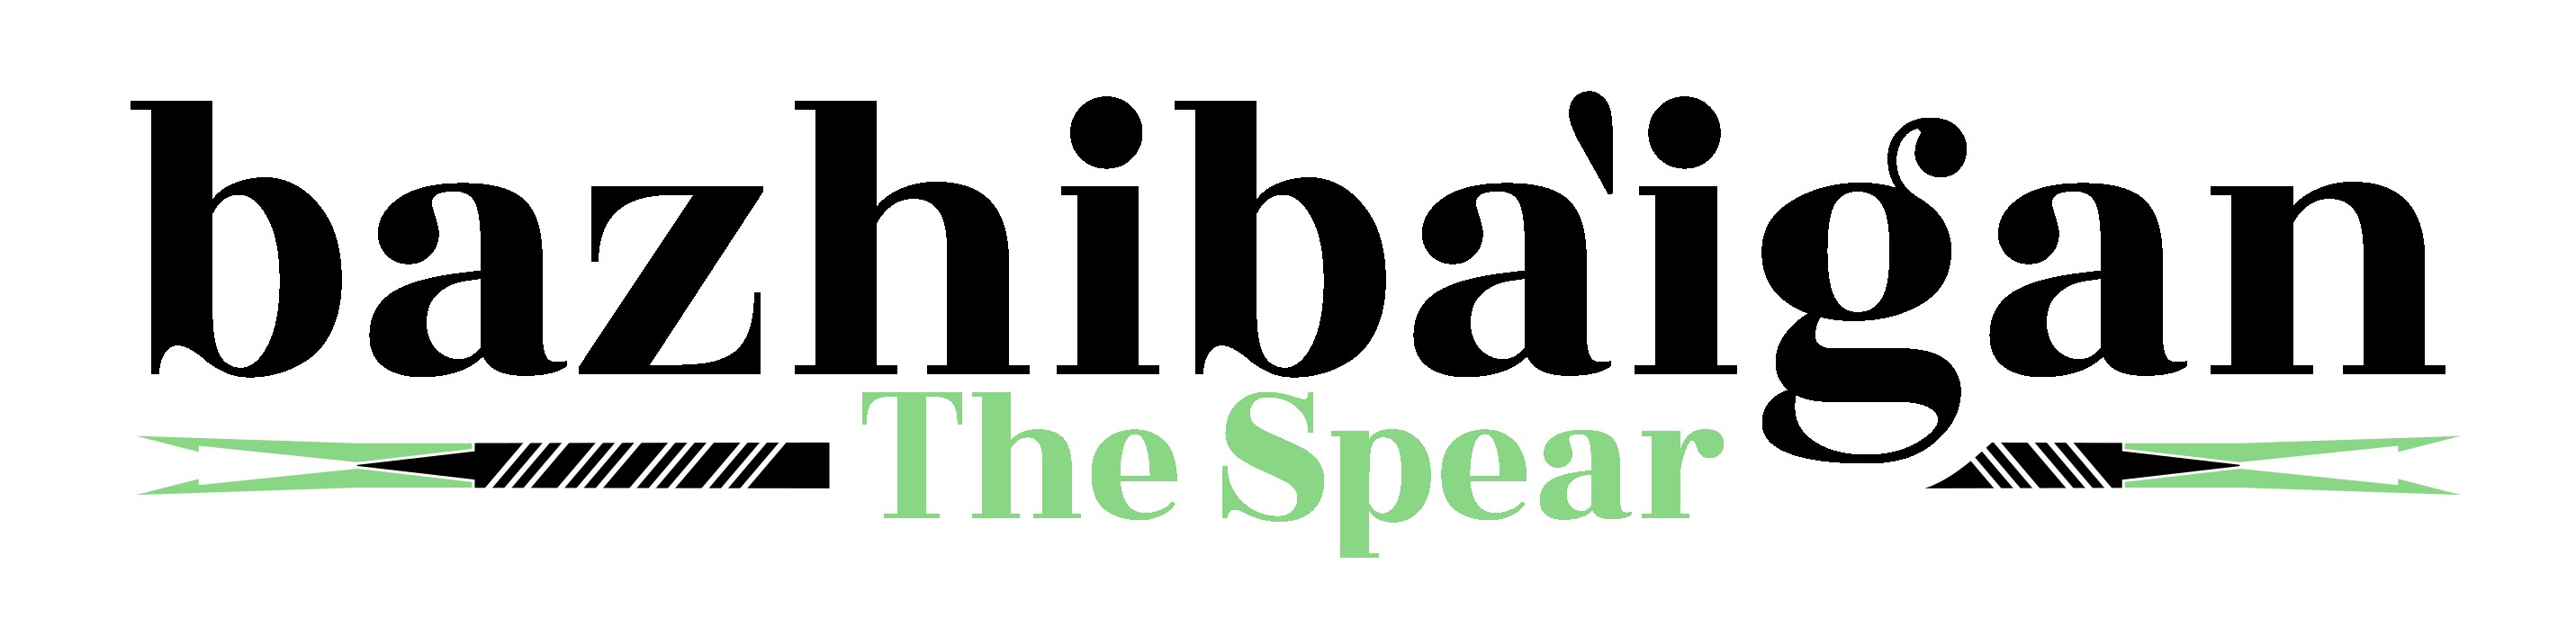 bazhiba'igan newspaper logo